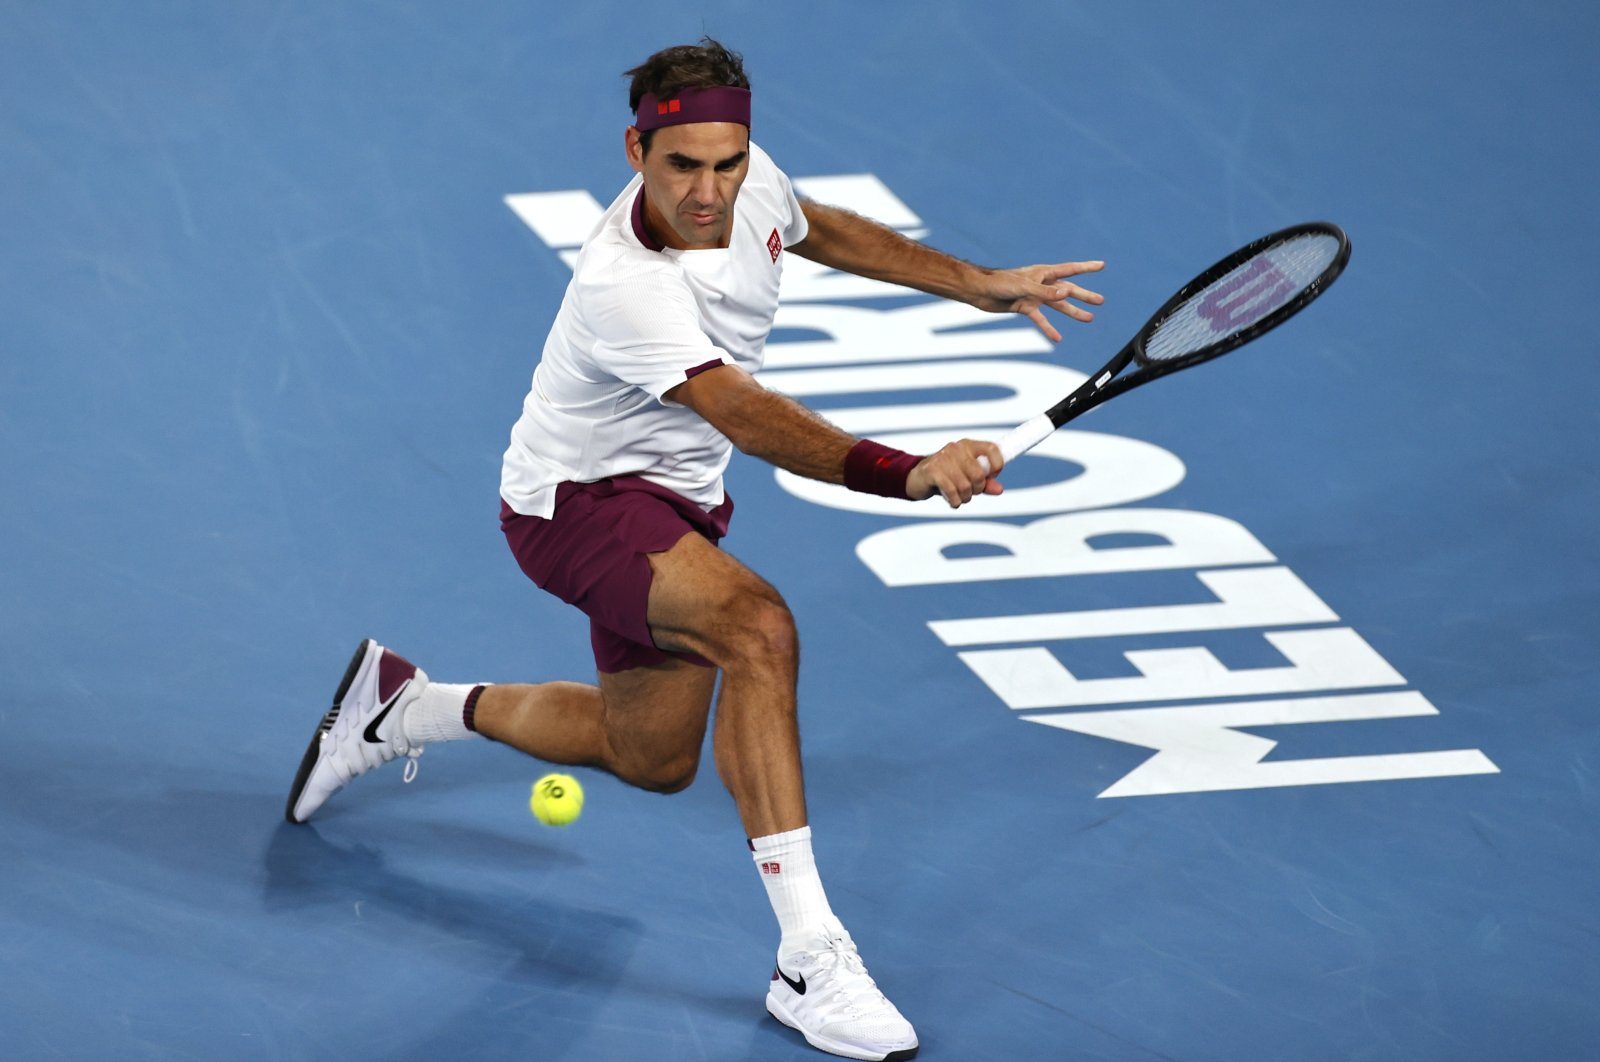 Roger Federer makes a return to Marton Fucsovics during their fourth round match at the Australian Open tennis championship in Melbourne, Australia, Jan. 26, 2020. (AP Photo)